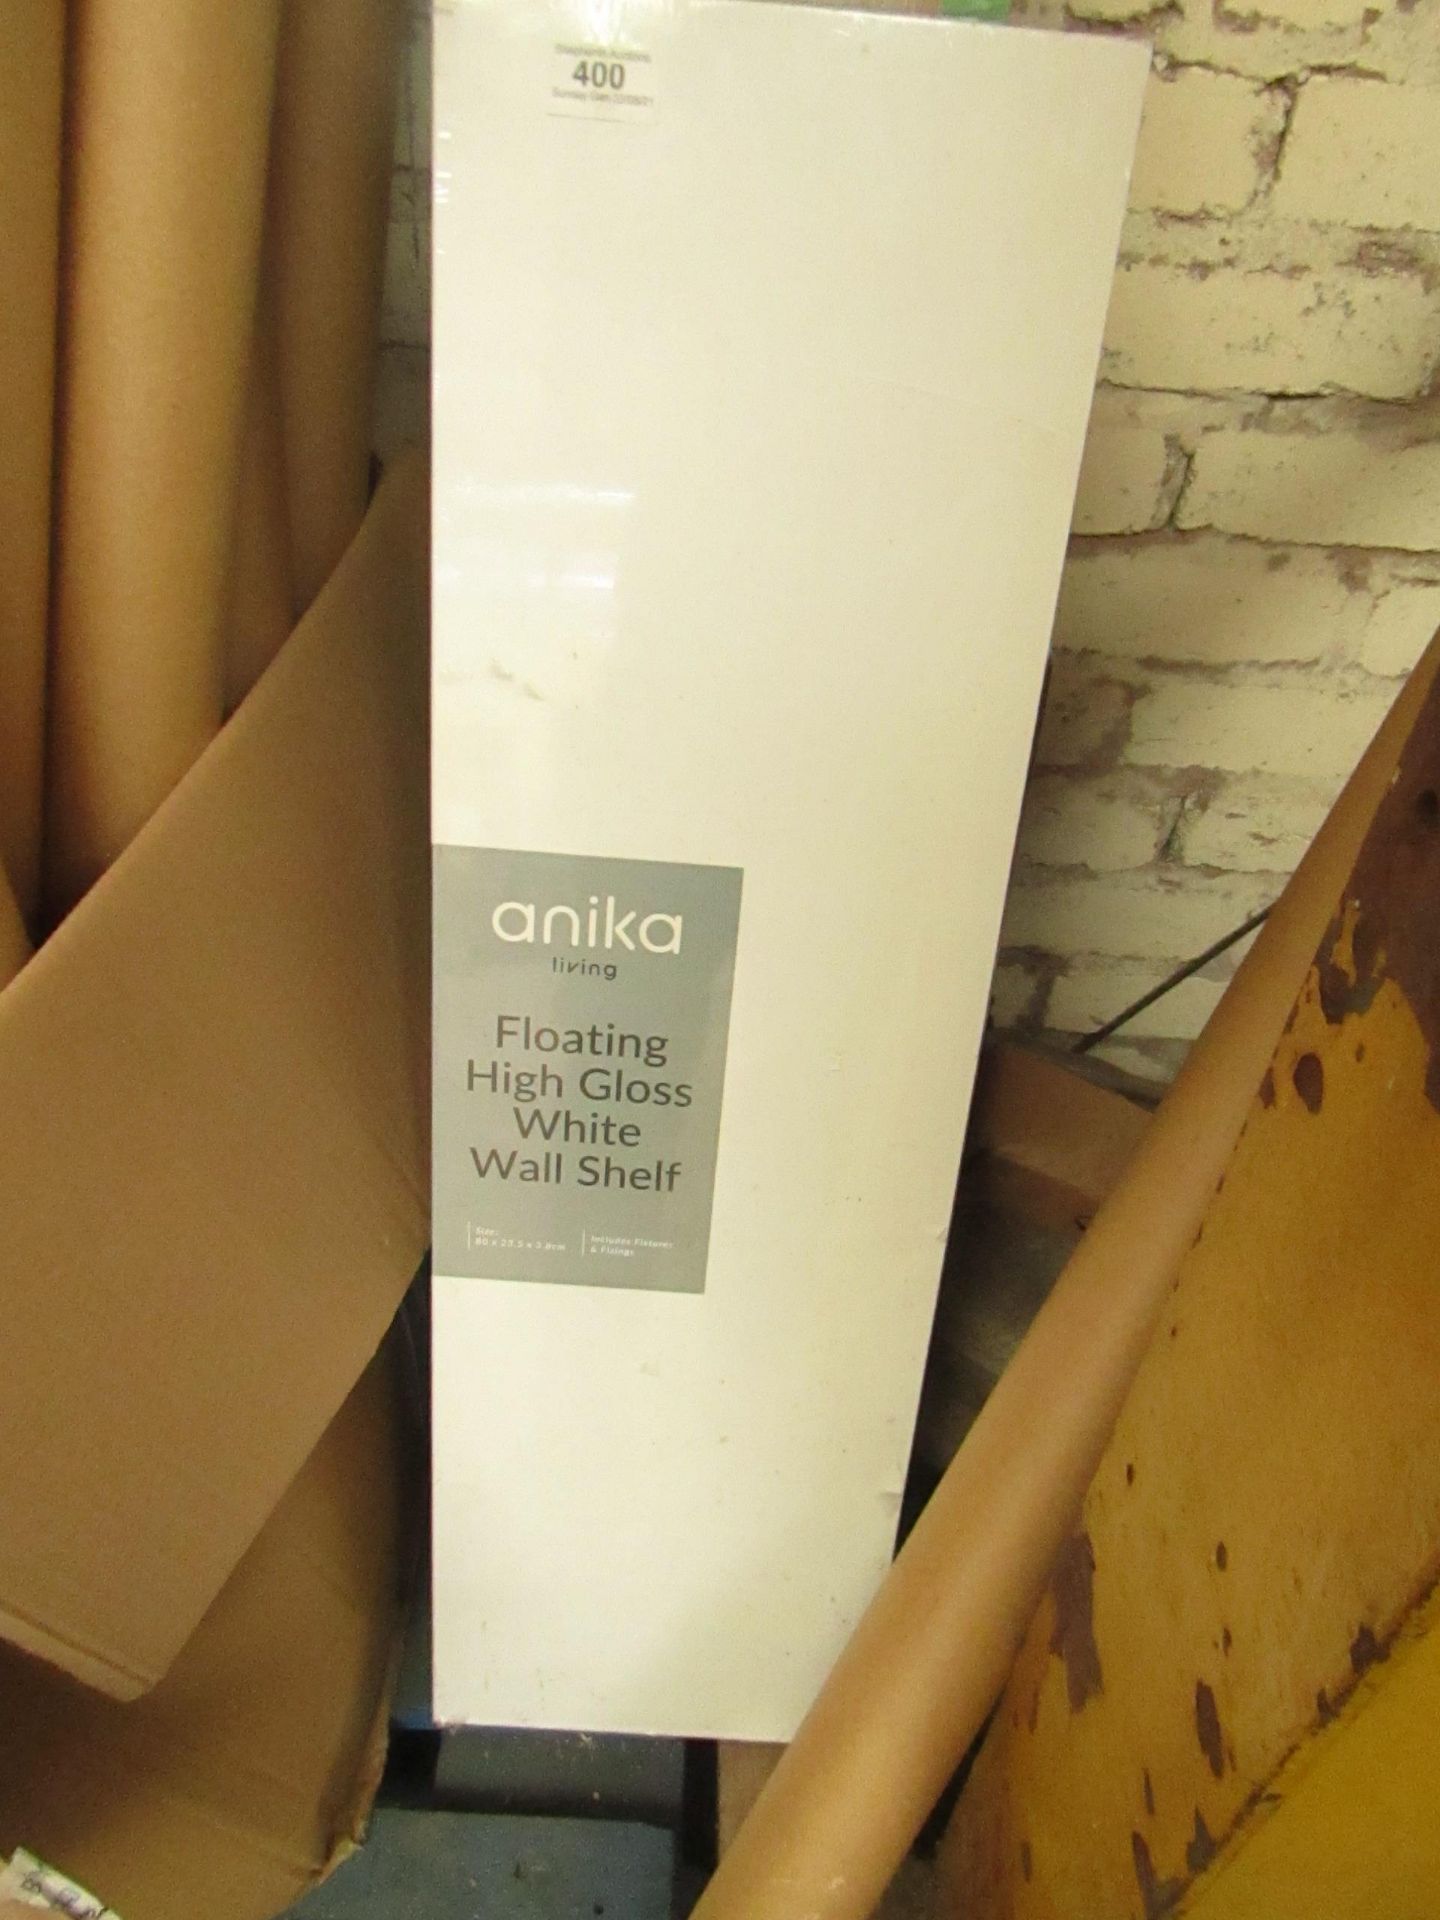 Anika Living - Floating High Gloss White Wall Shelf - Looks Unused & Packaged.